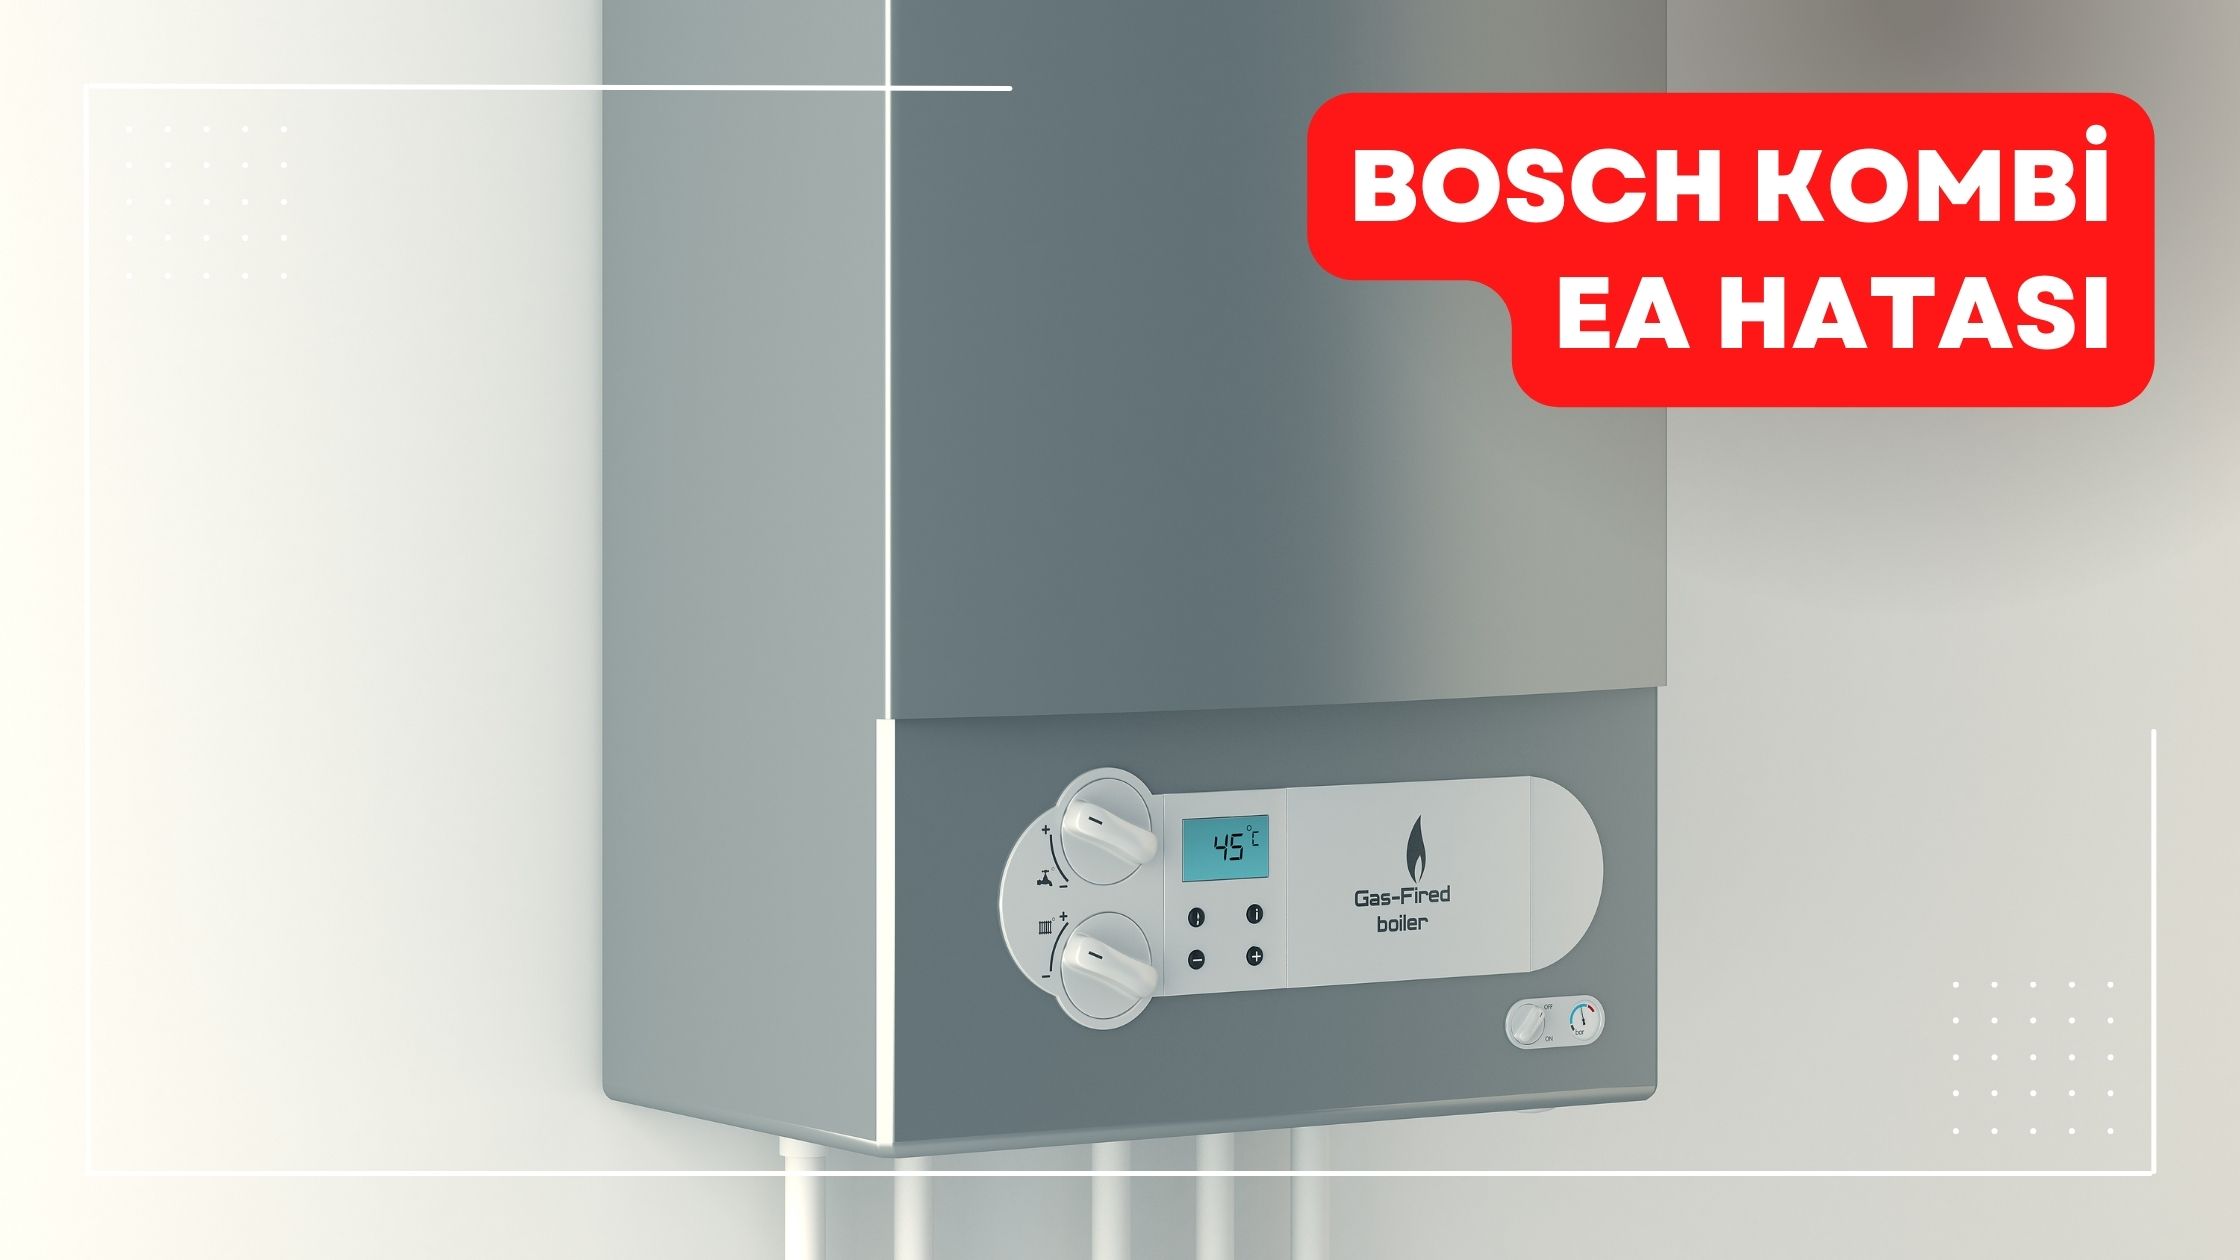 Bosch Kombi EA Hatası